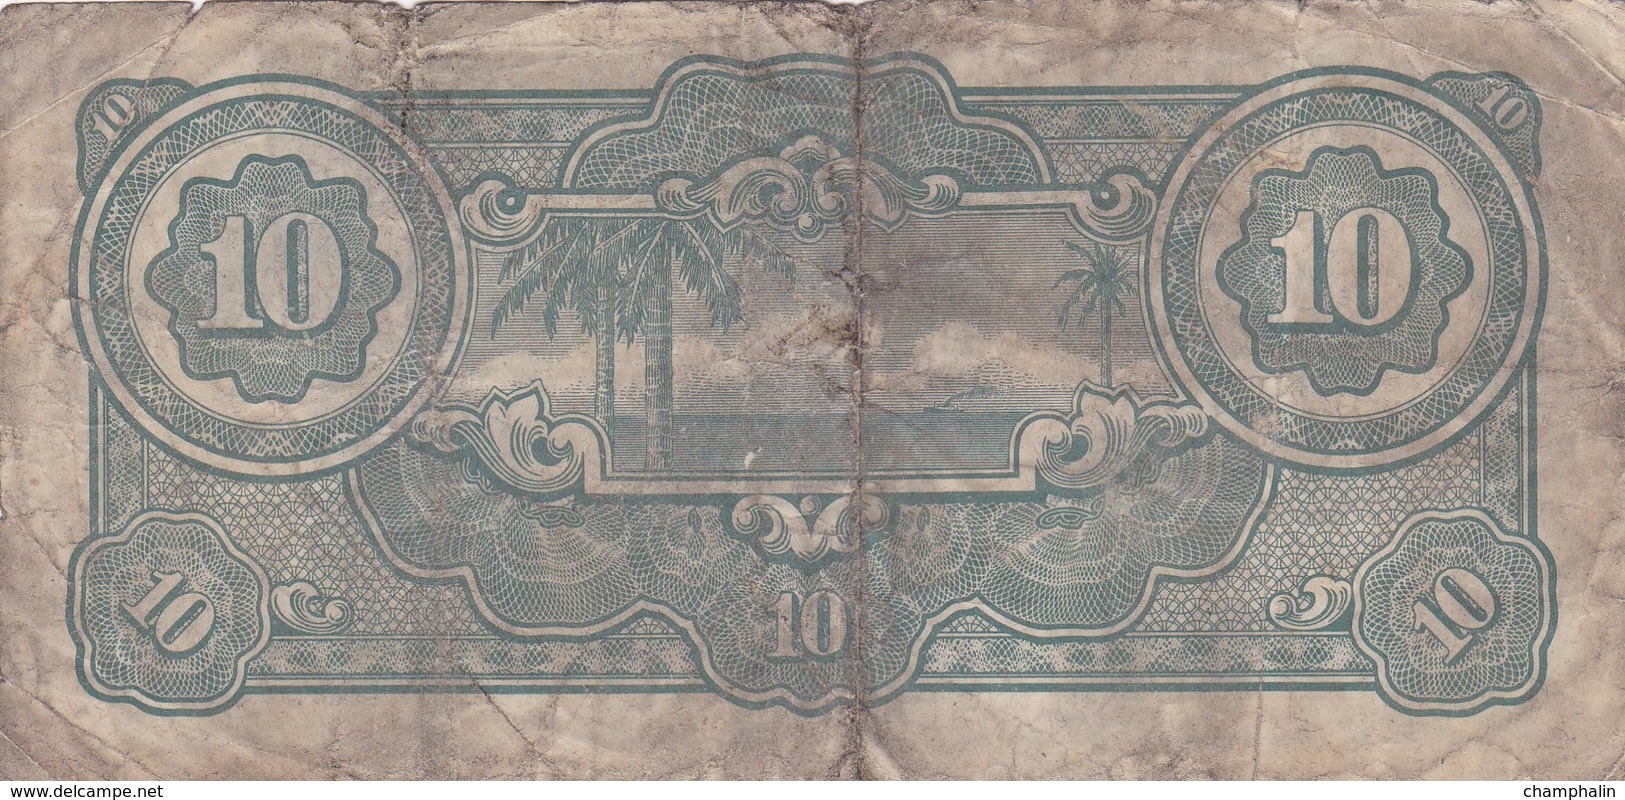 Malaisie - Billet De 10 Dollars - Occupation Japonaise WWII - Maleisië